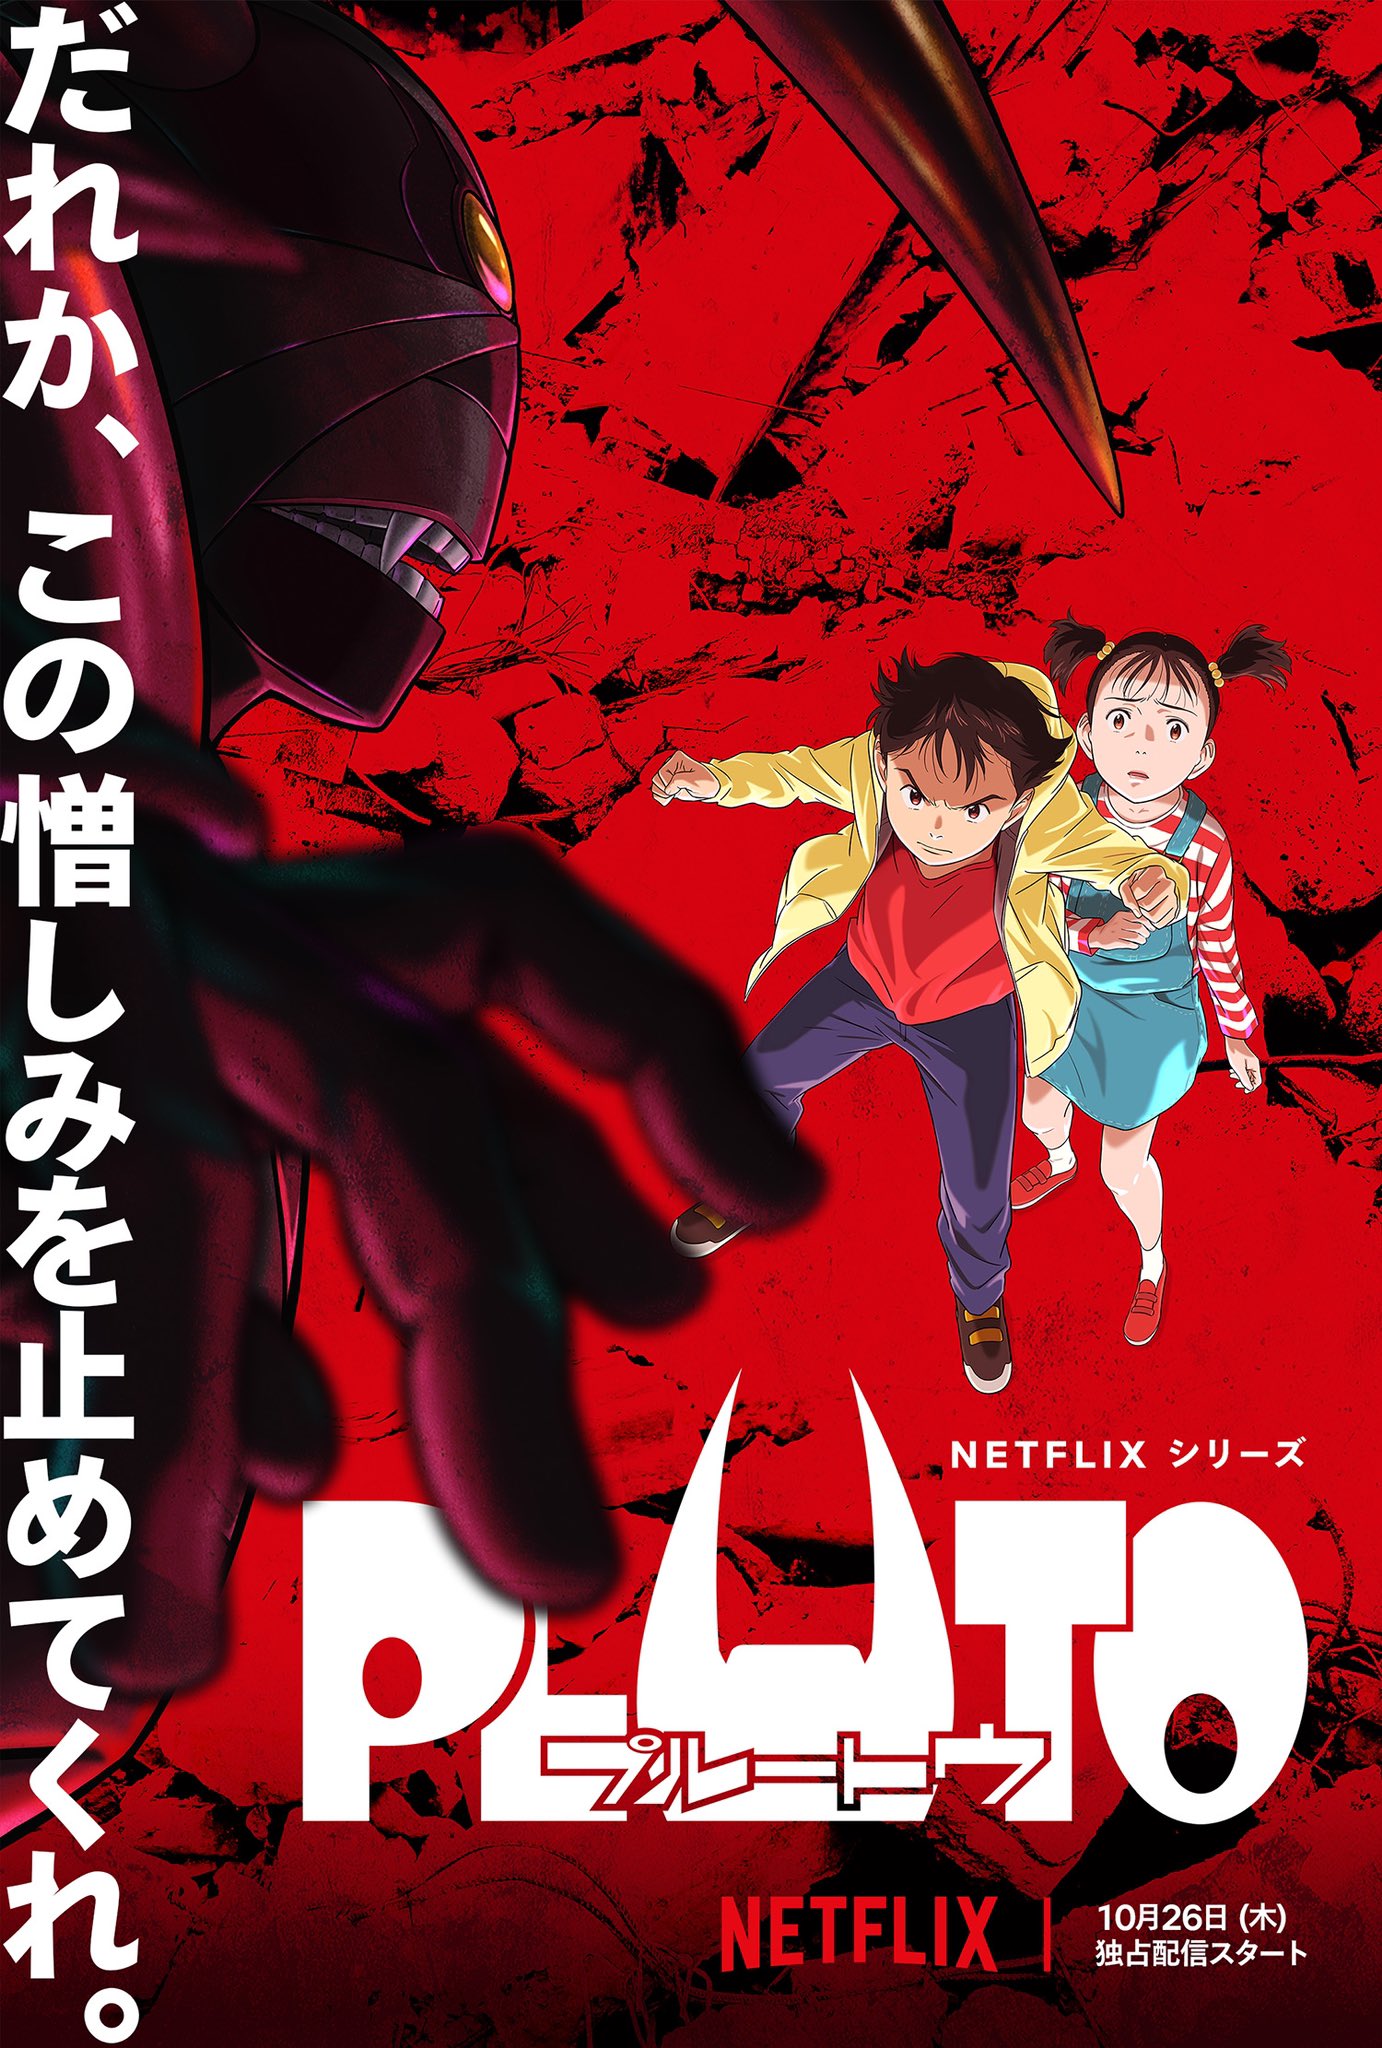 Anime Fiksi Ilmiah Terbaik Netflix